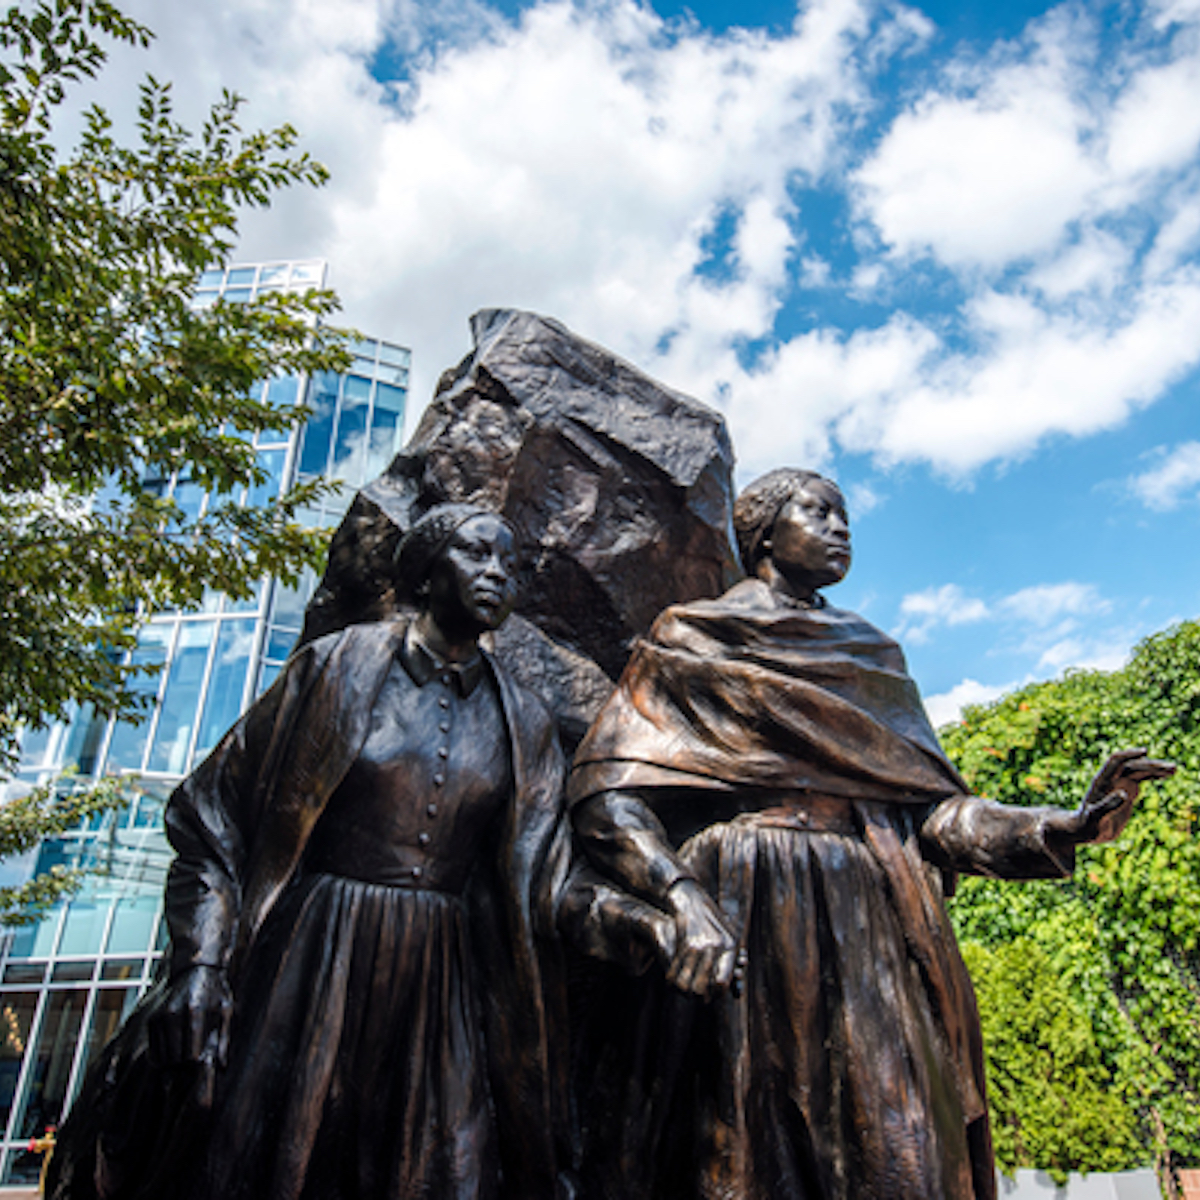 Edmonton Sisters statue in Alexandria